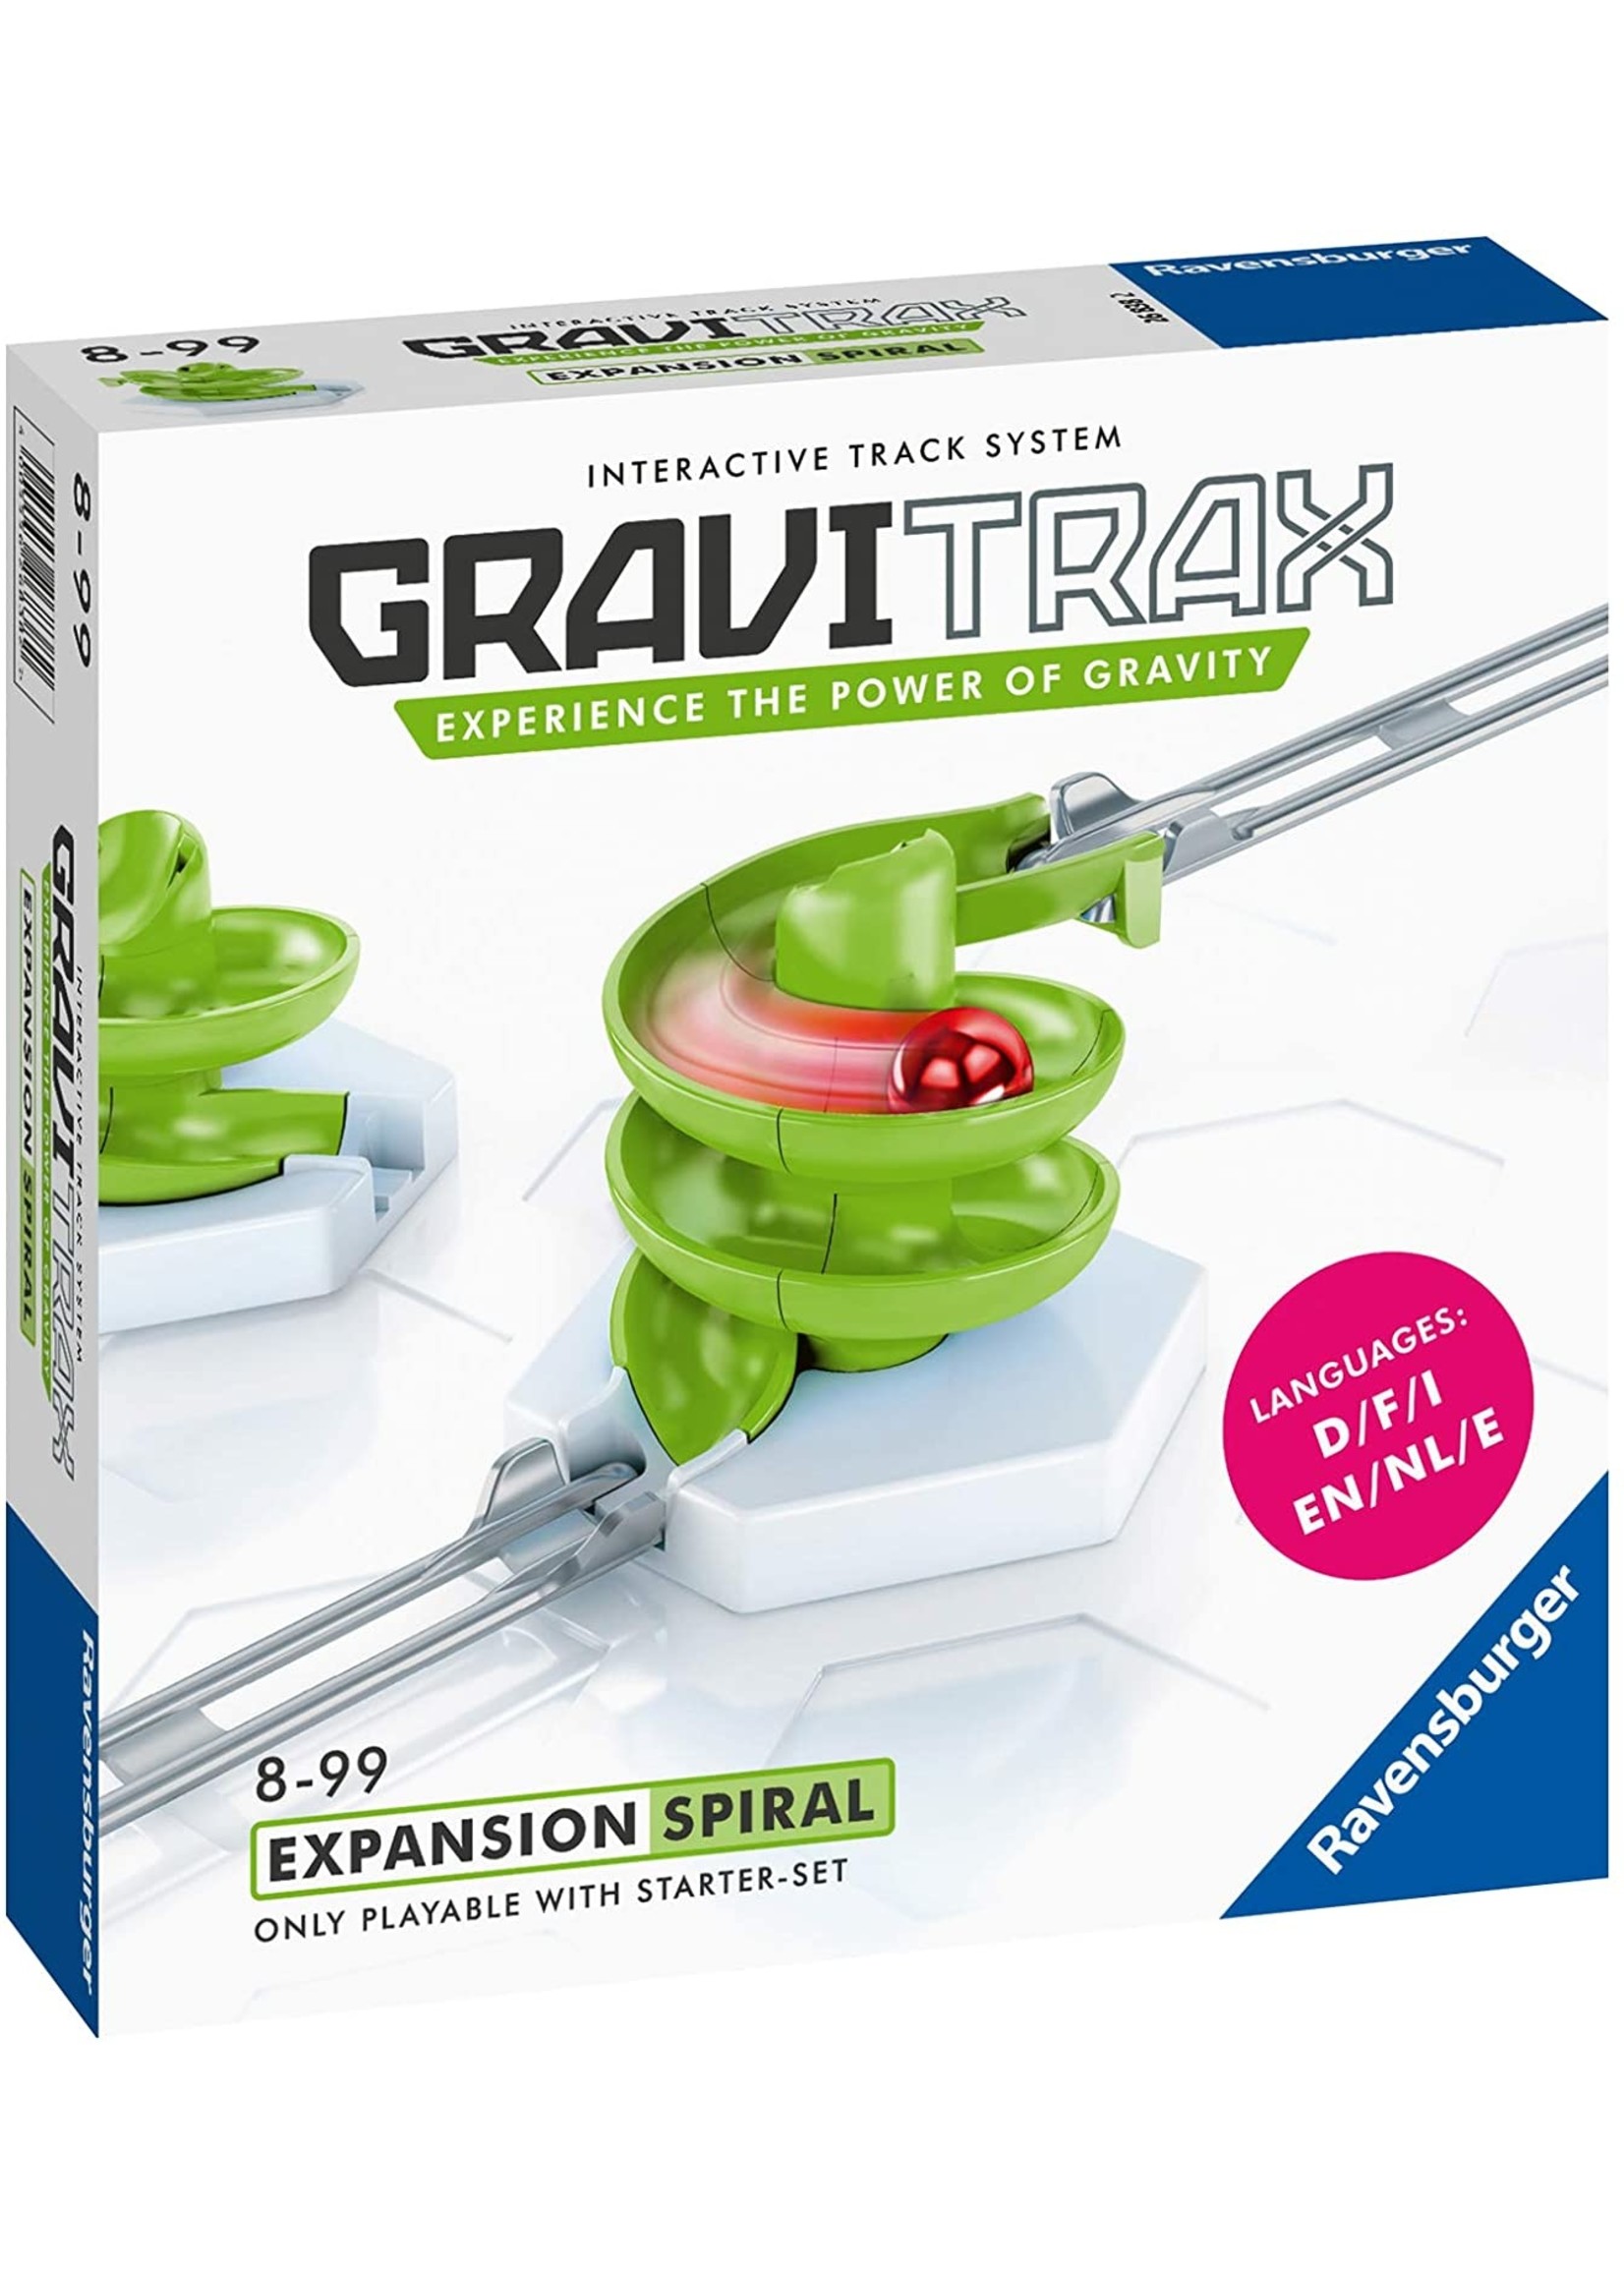 GraviTrax 27603 Extension Catapult